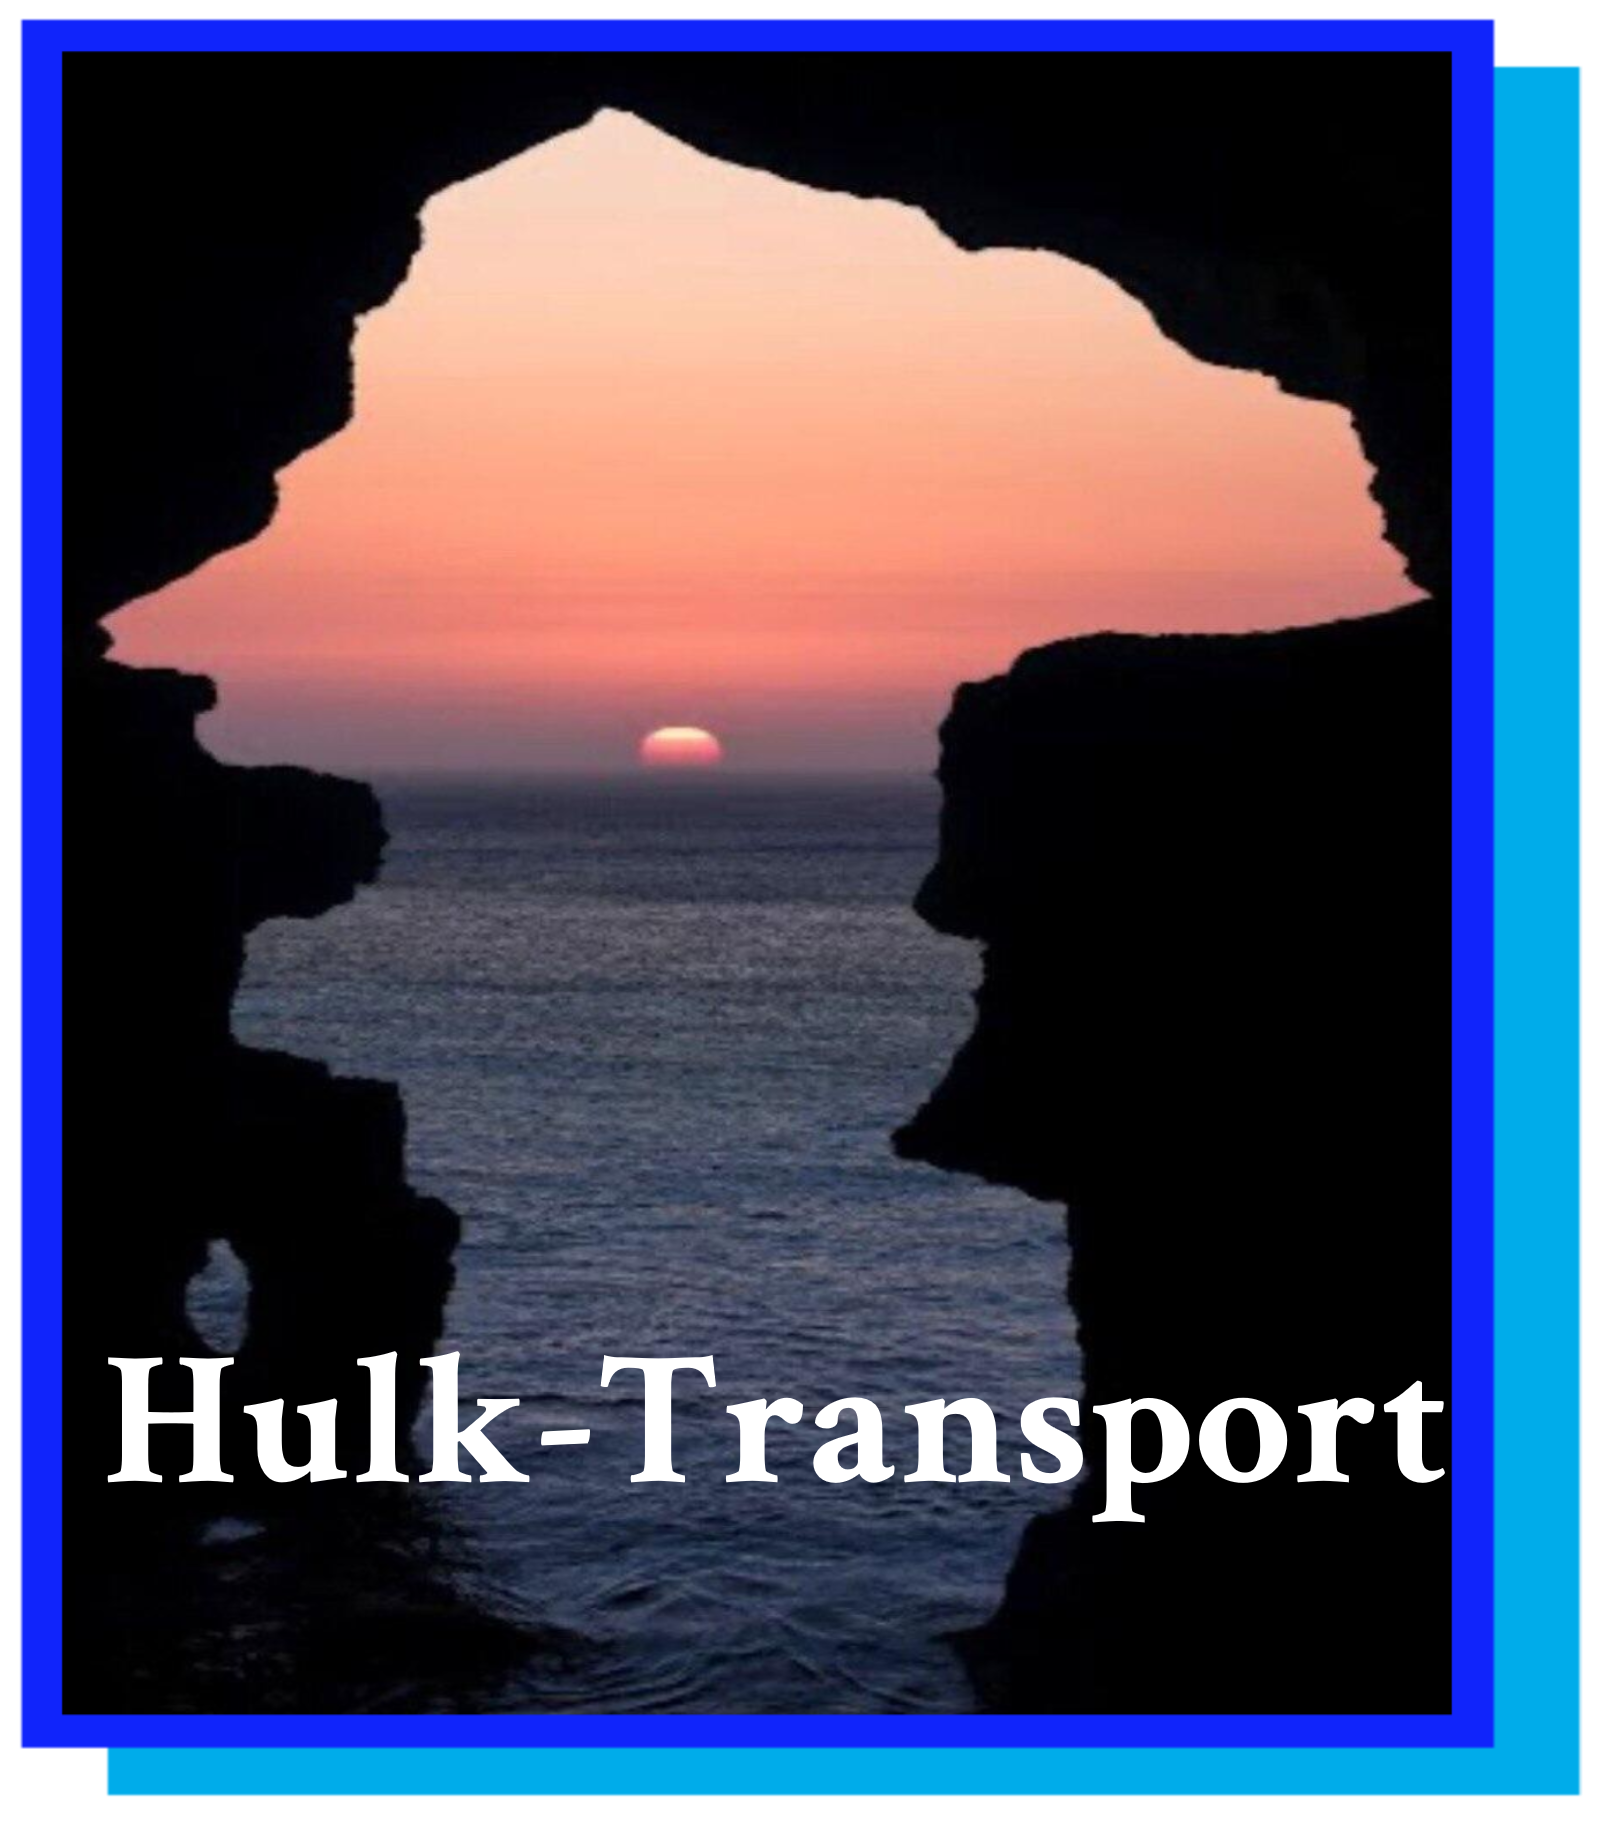 Hulk-Transport